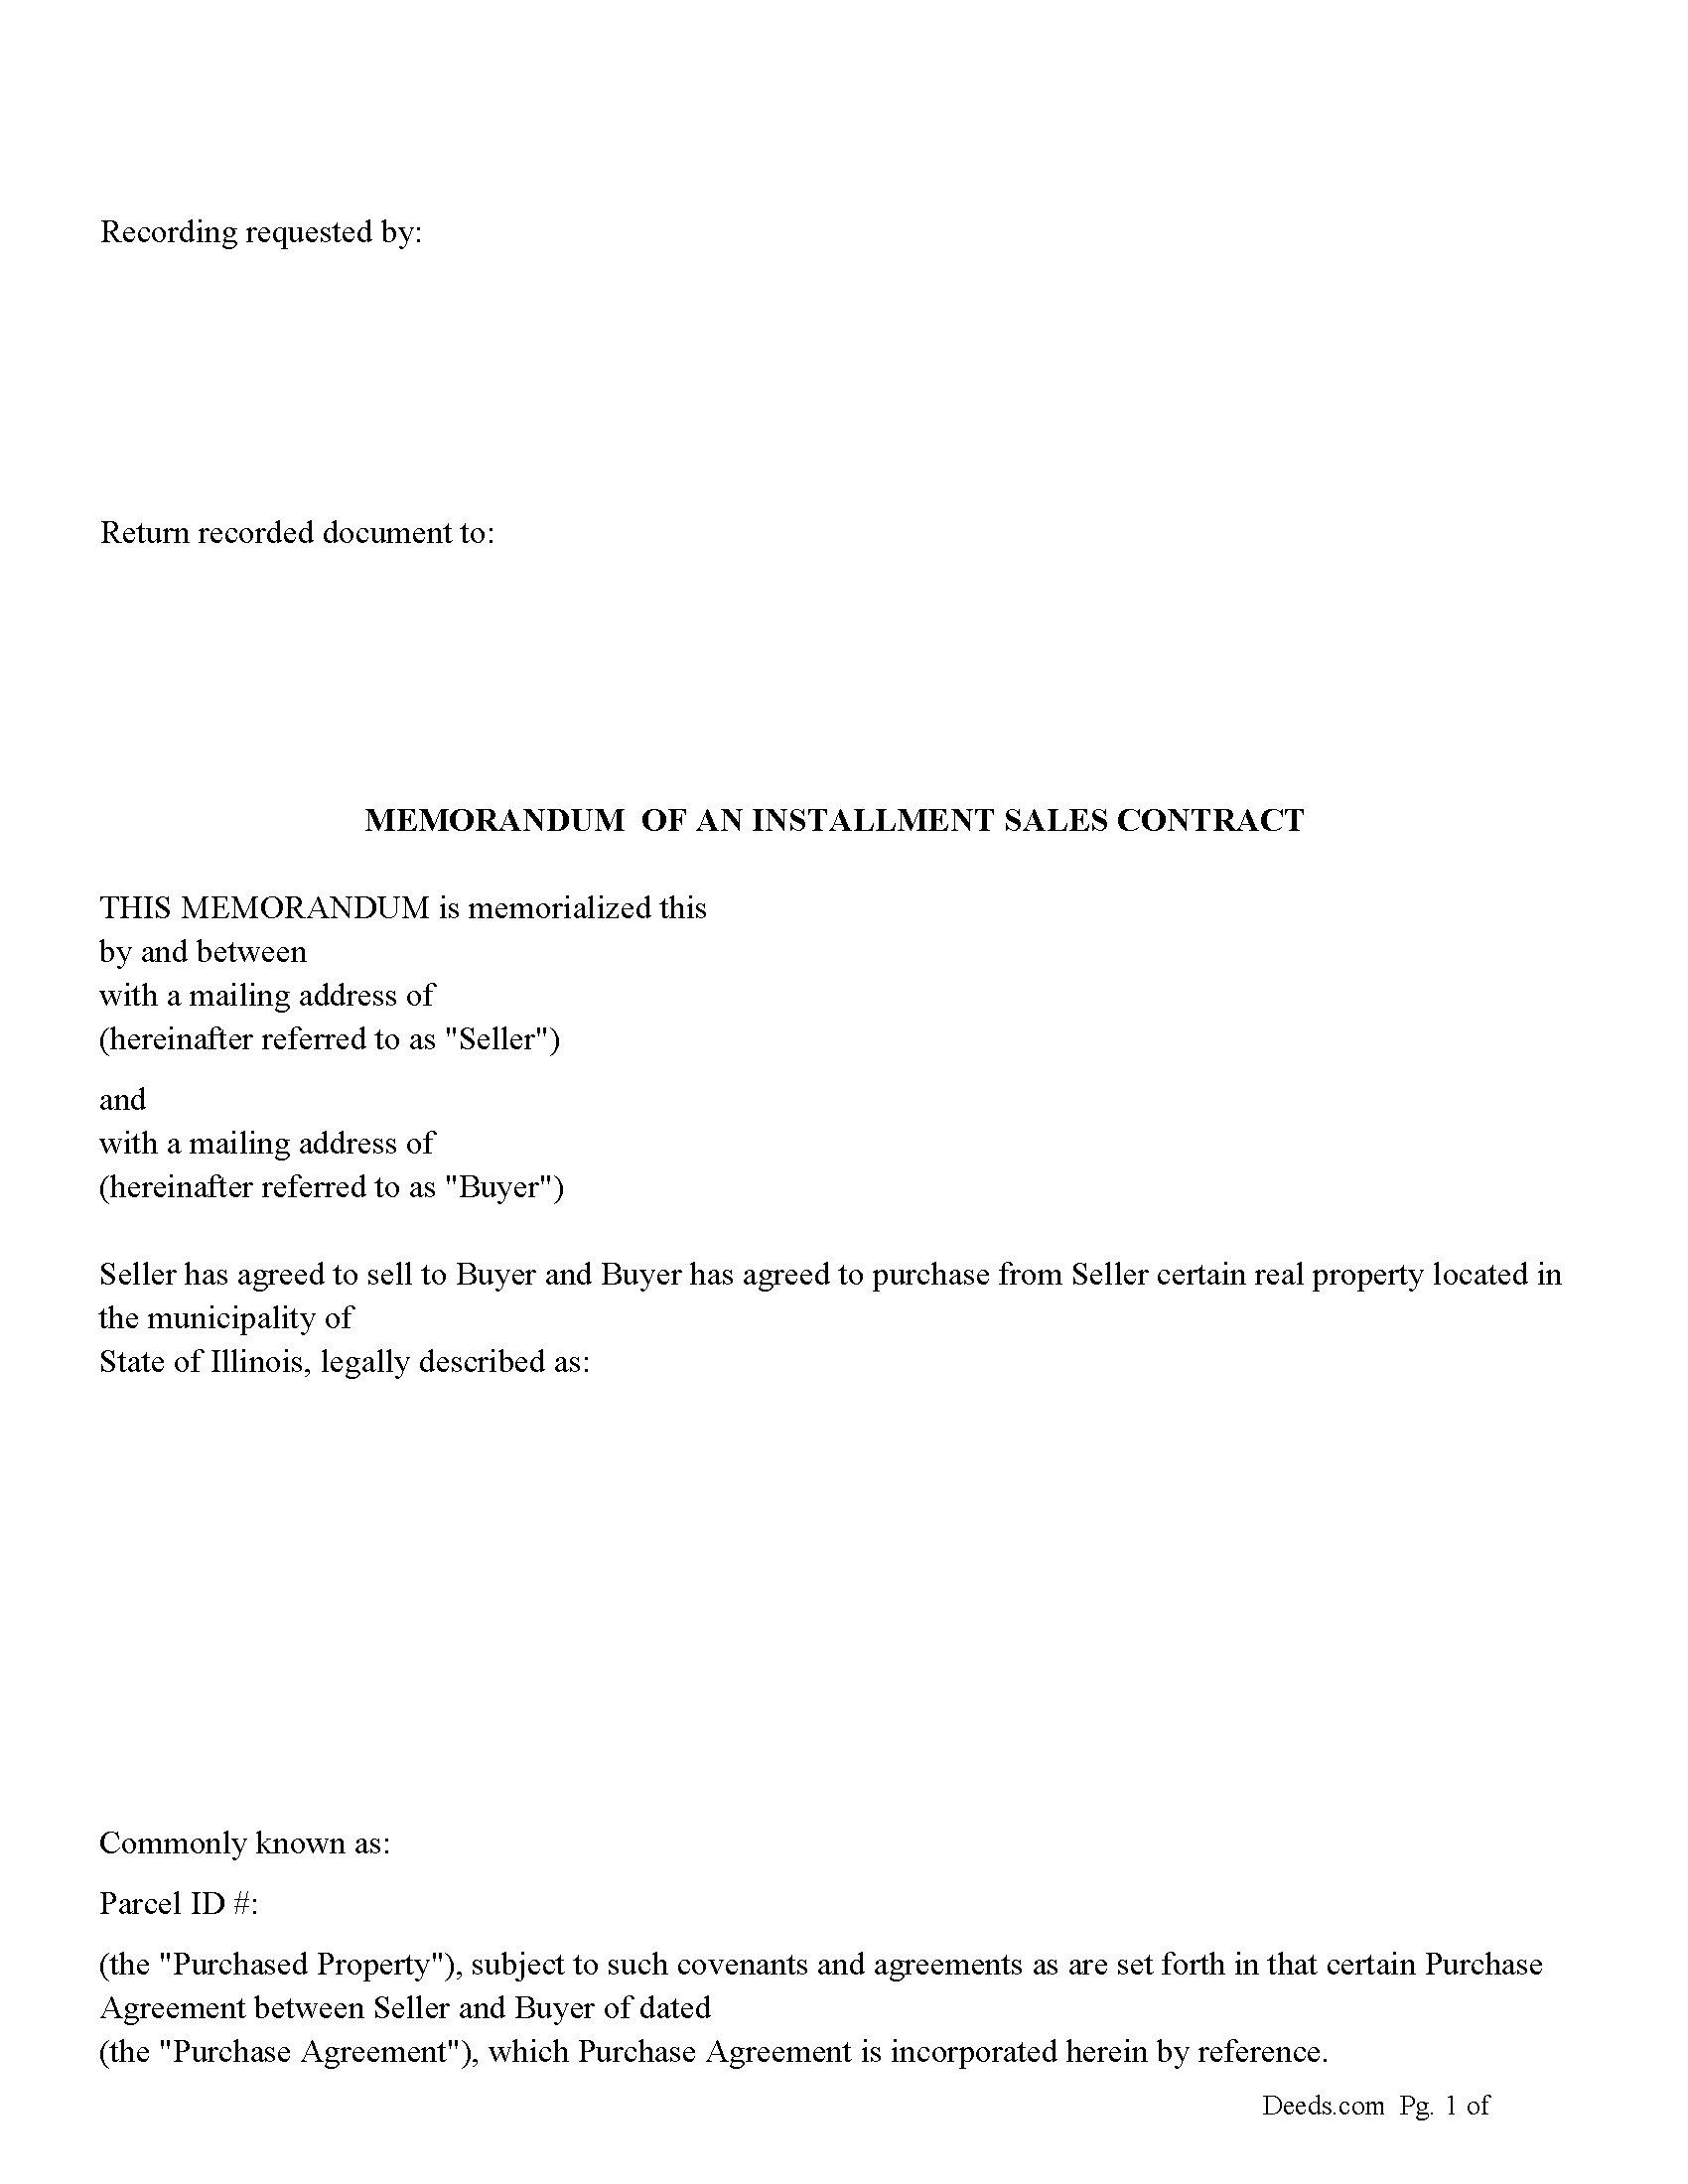 Iroquois County Memorandum of an Installment Sales Contract Form